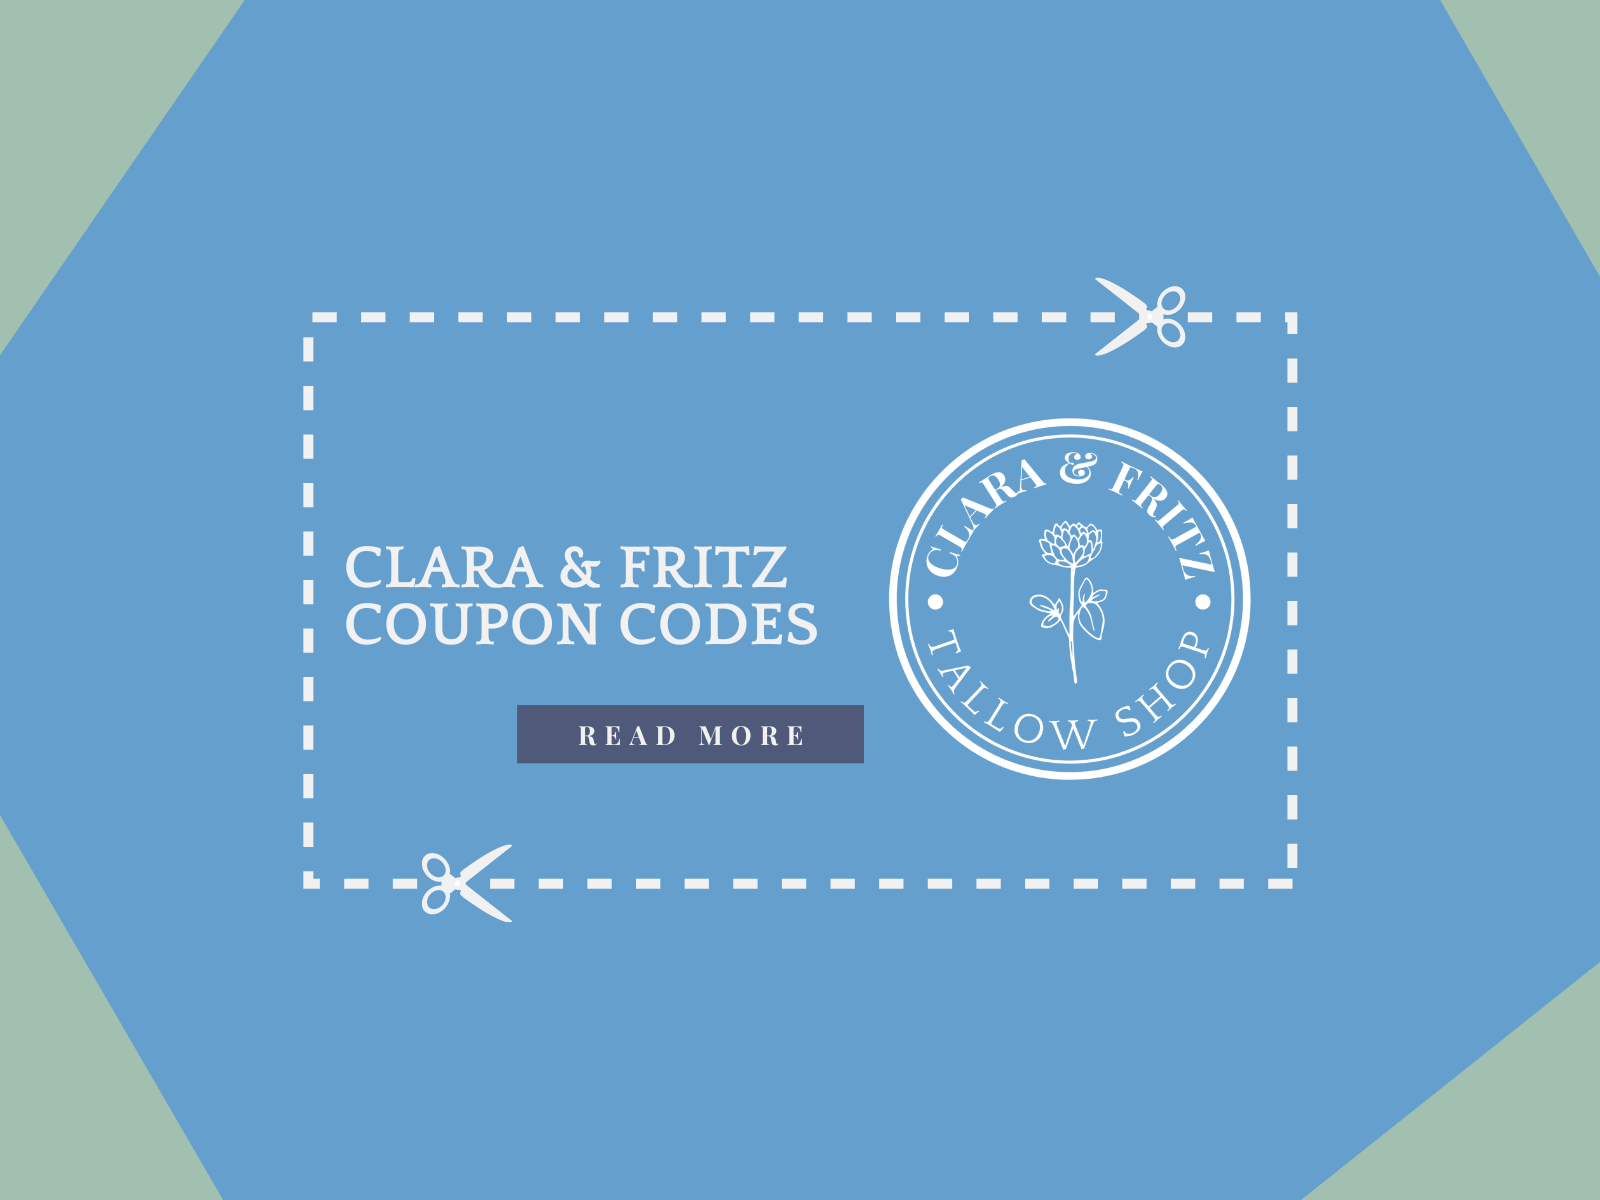 Clara & Fritz Tallow Shop Coupon Codes